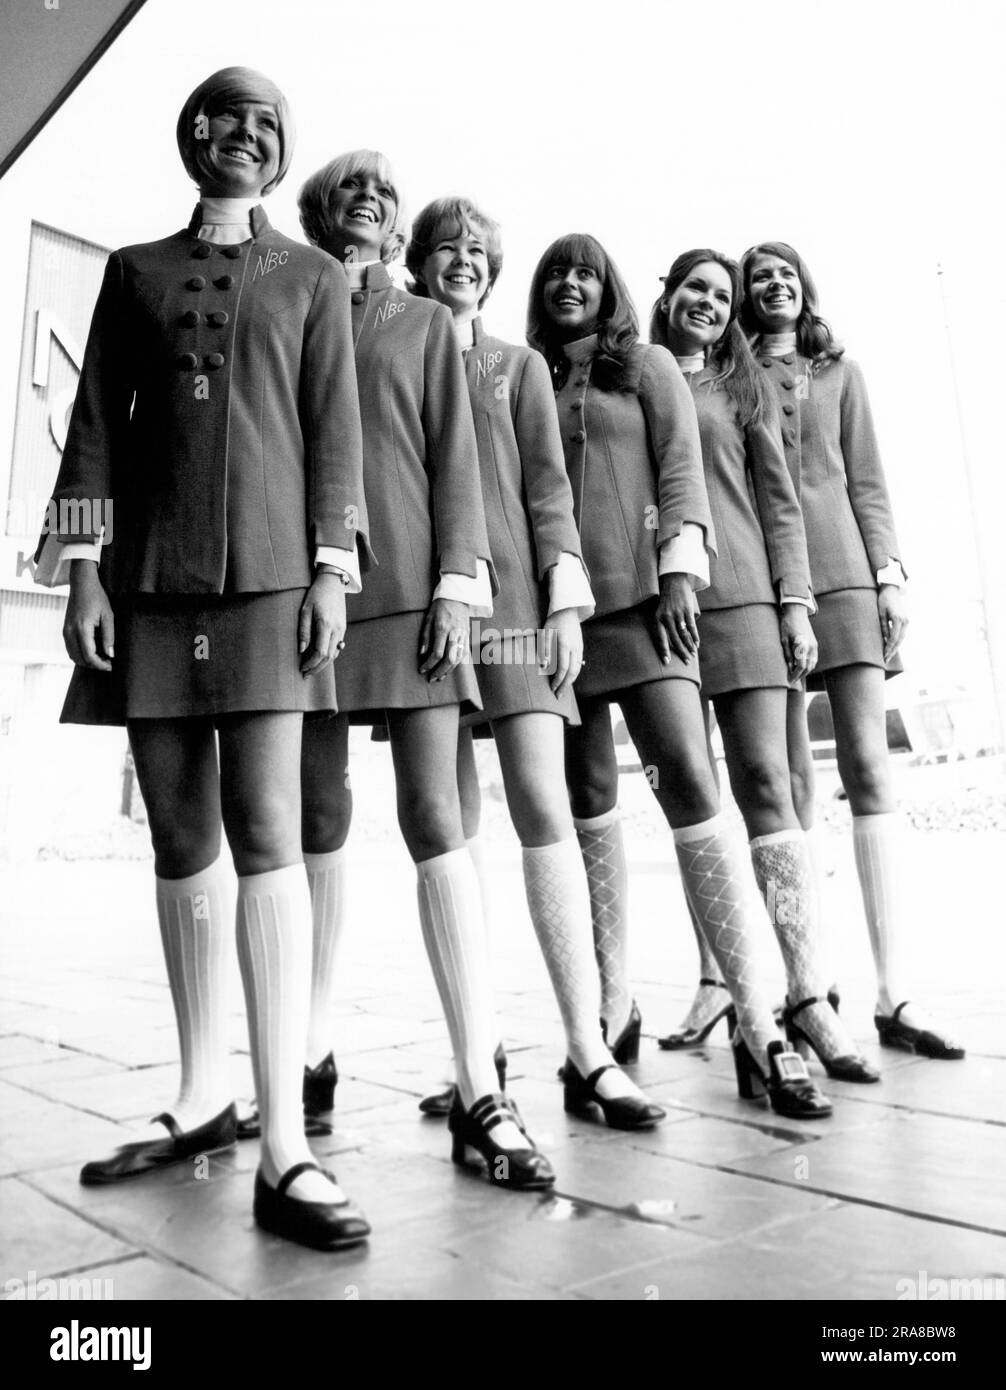 United States: 1970 Six NBC tour guides pose outside Stock Photo - Alamy